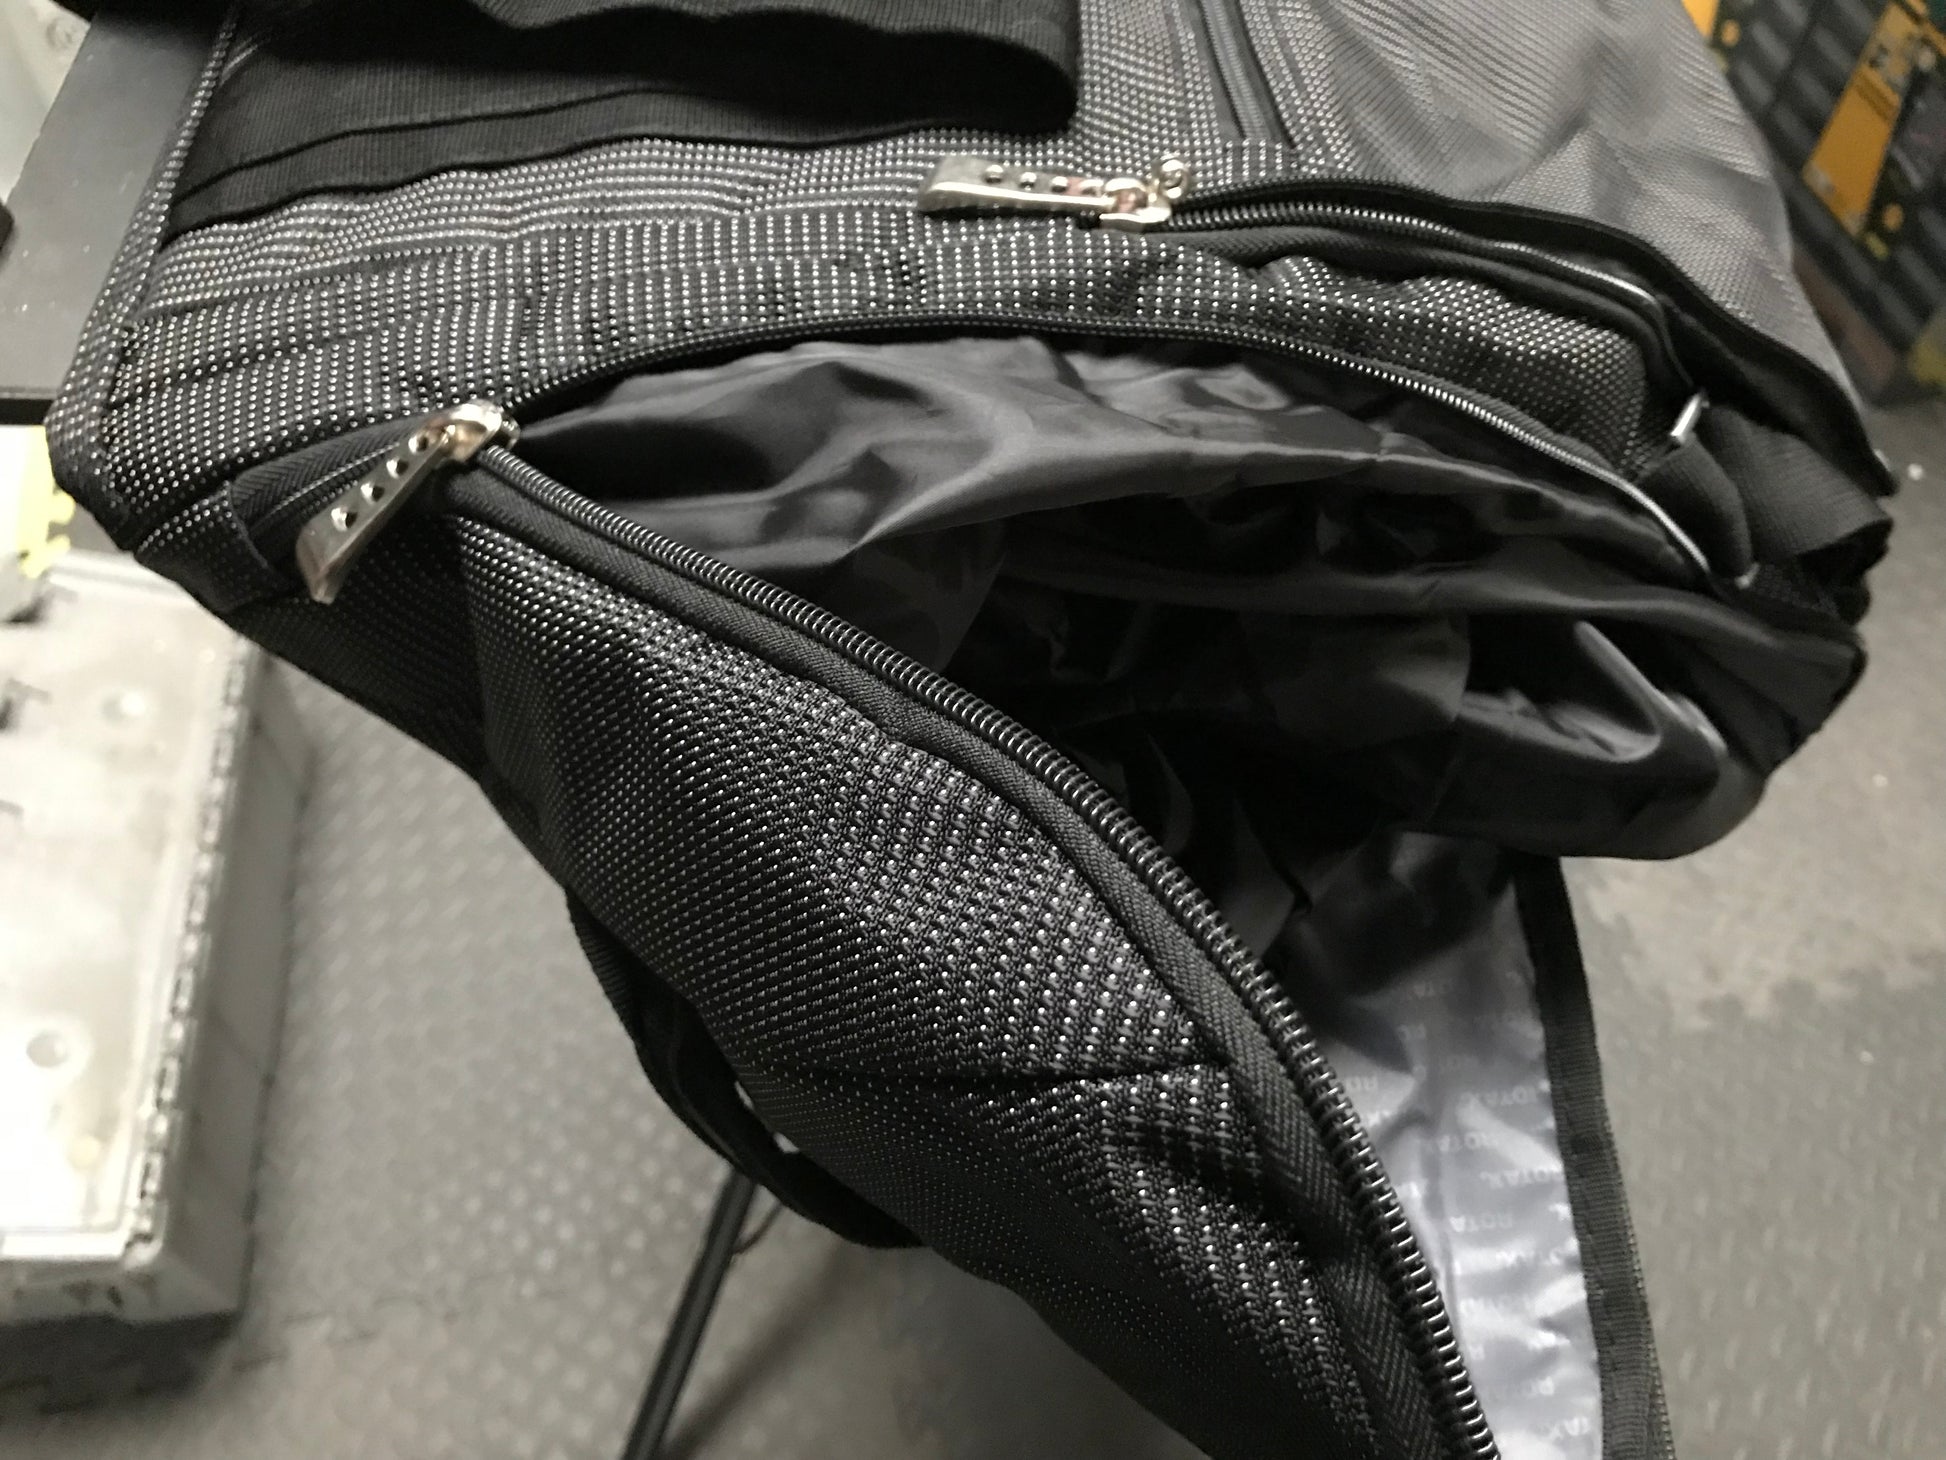 Rotax Sports Bag